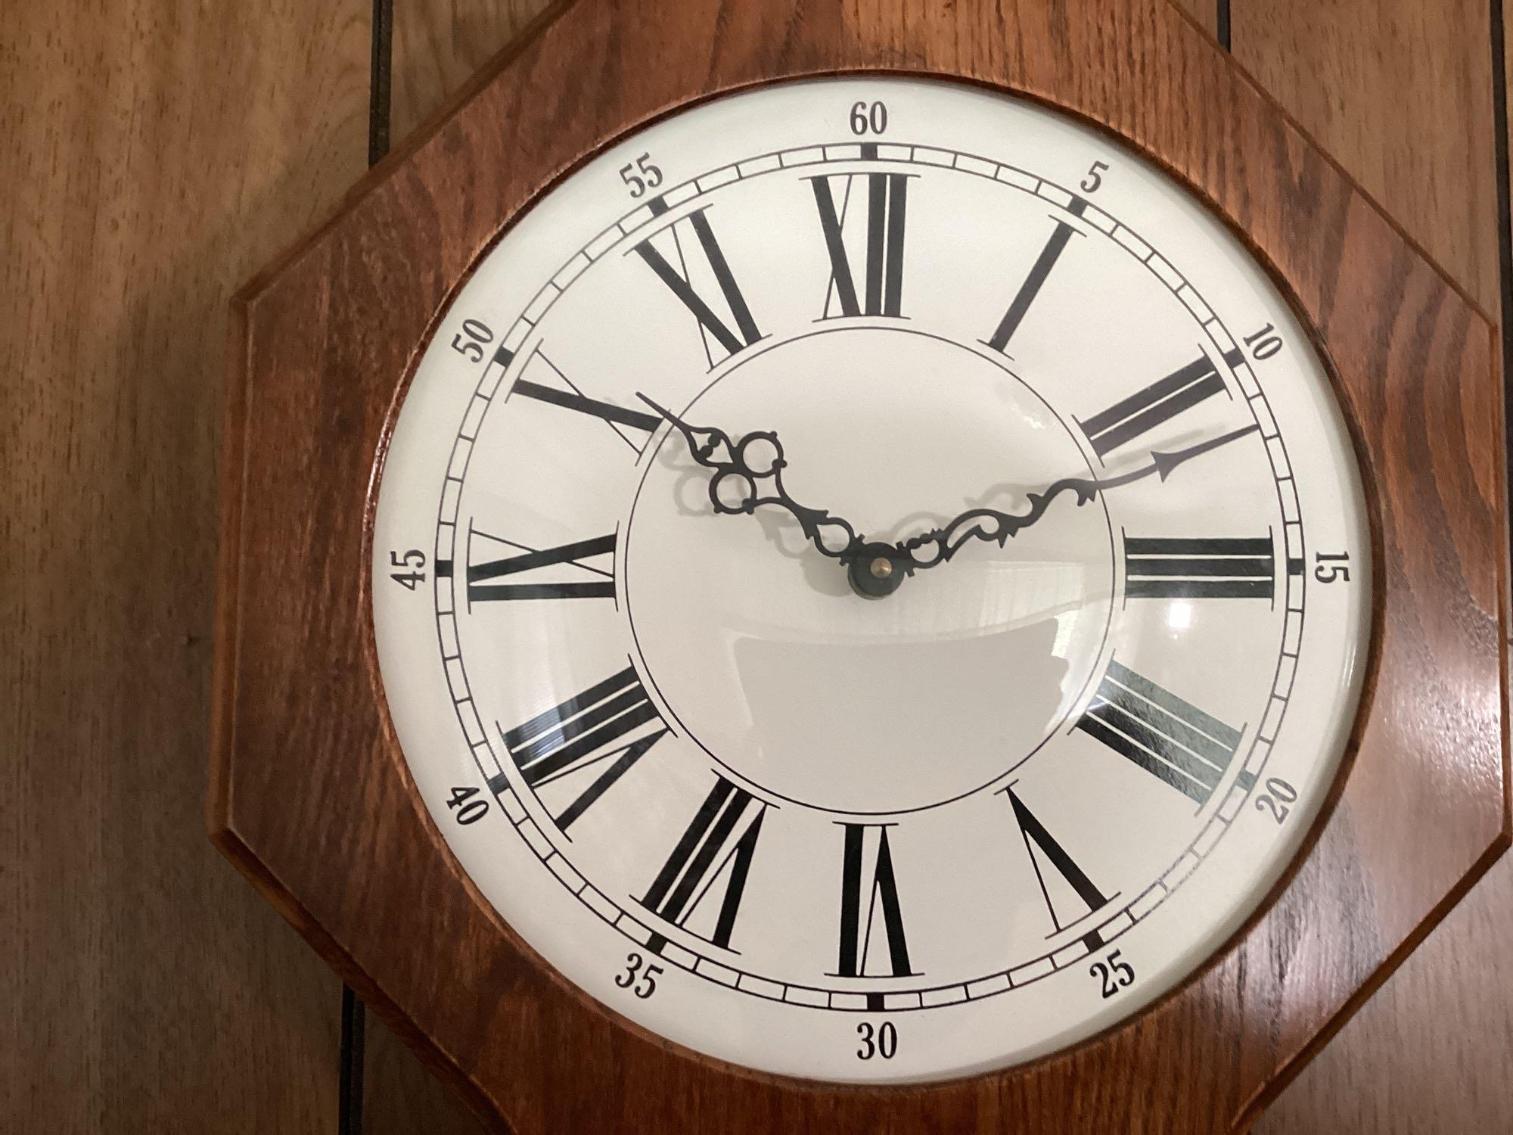 Image for Regulator Style Clock